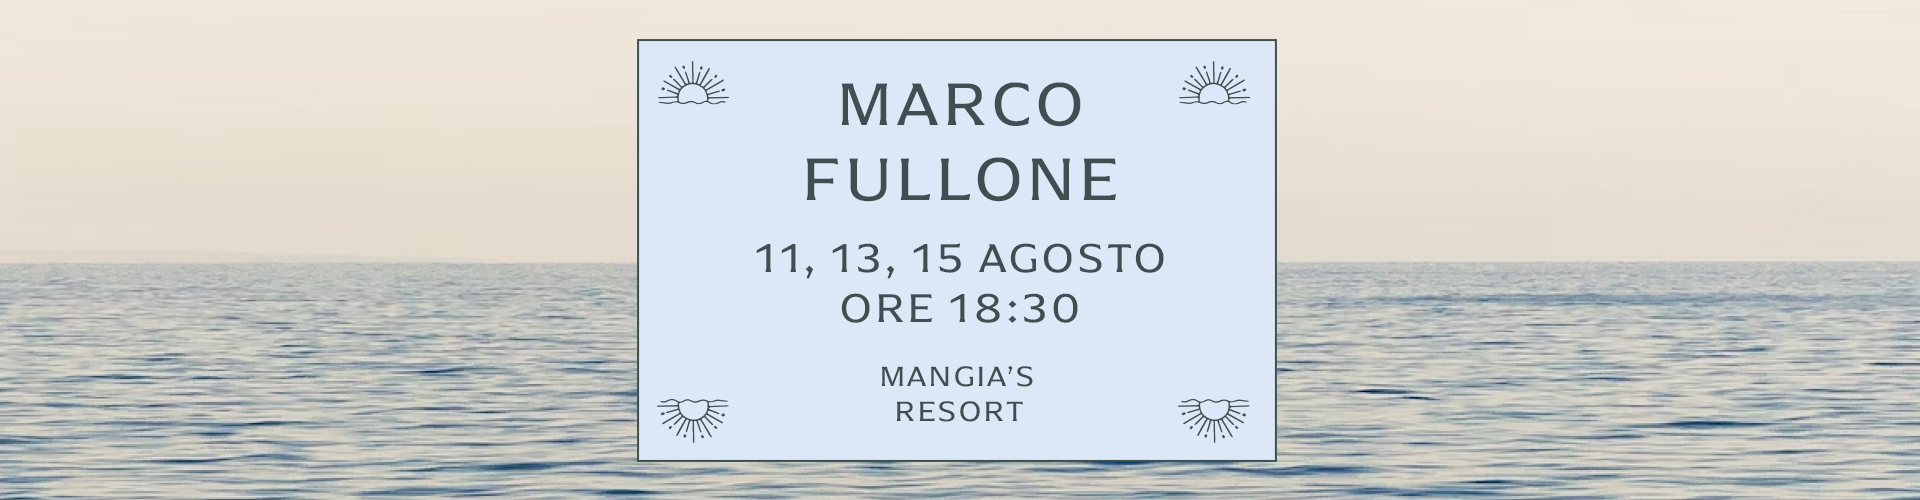 Marco Fullone